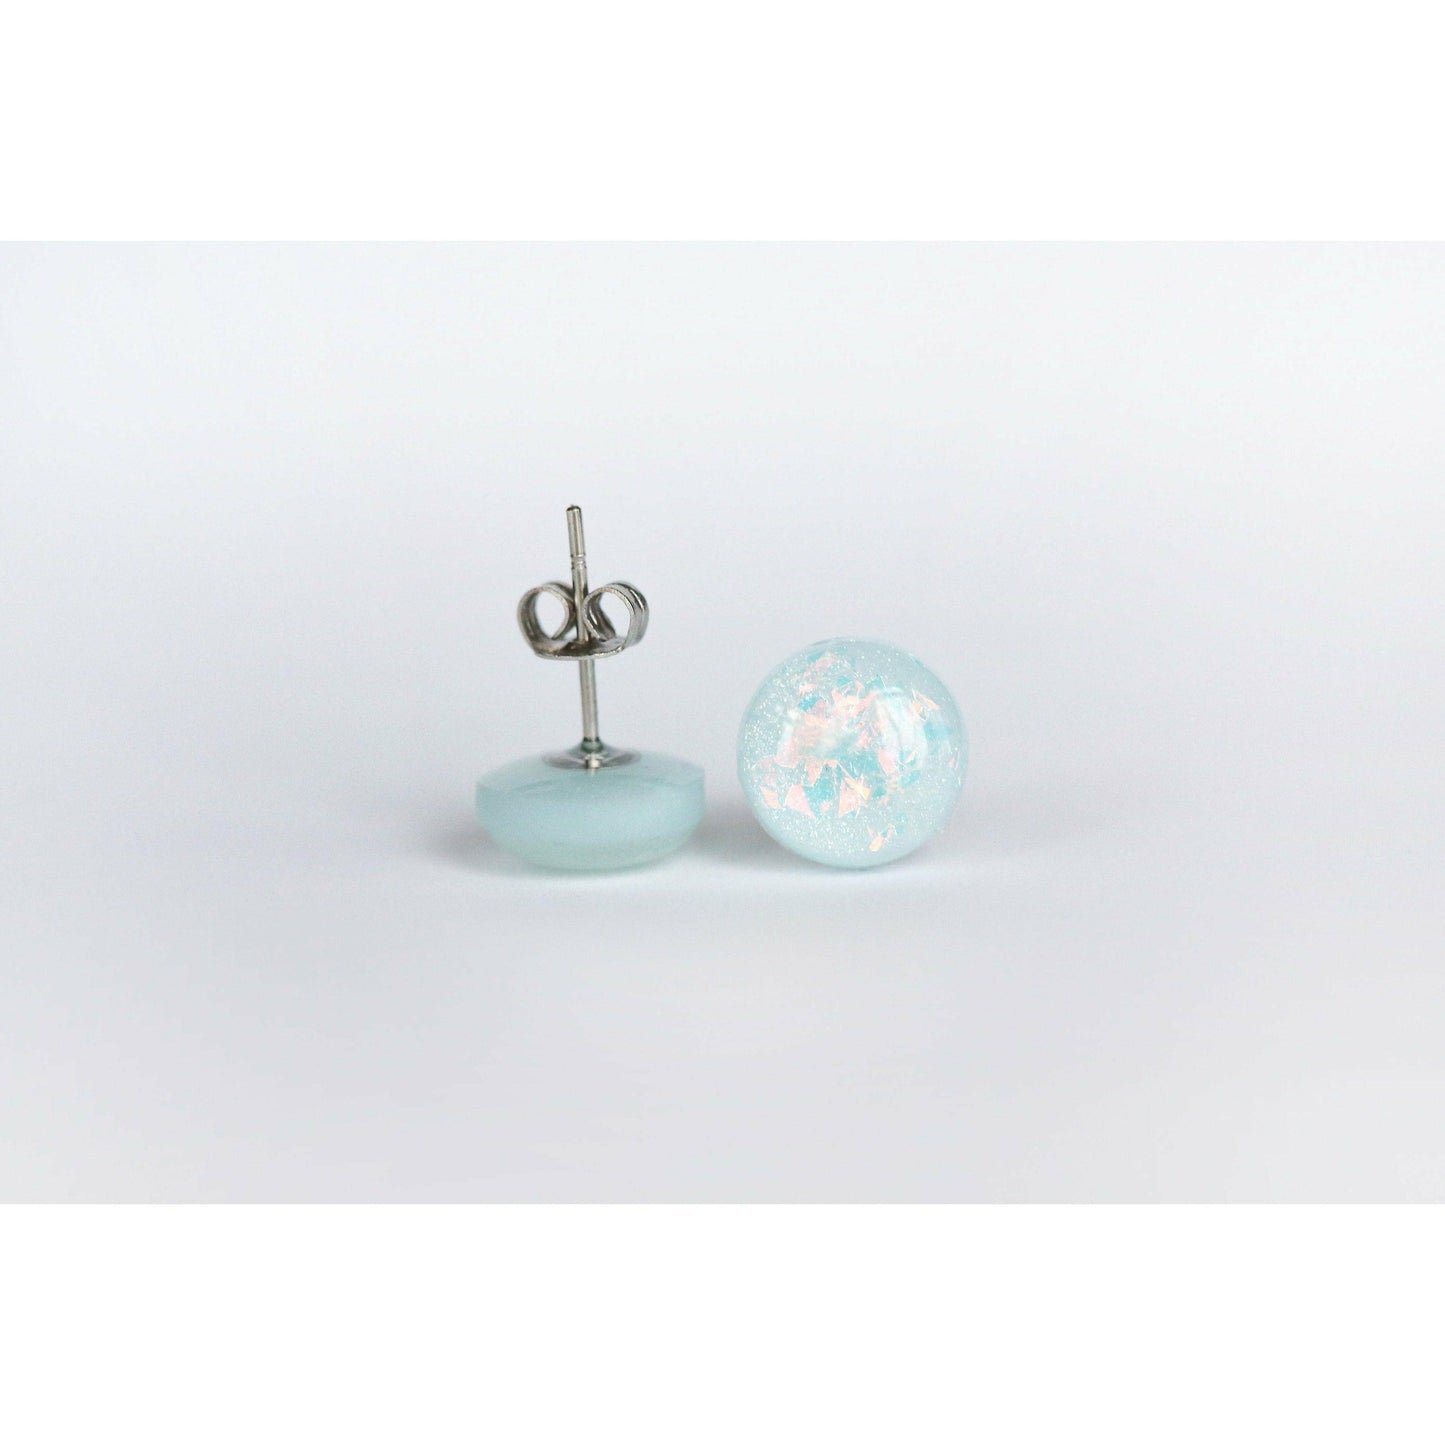 Sky blue sparkly earrings freeshipping - Ollijewelry